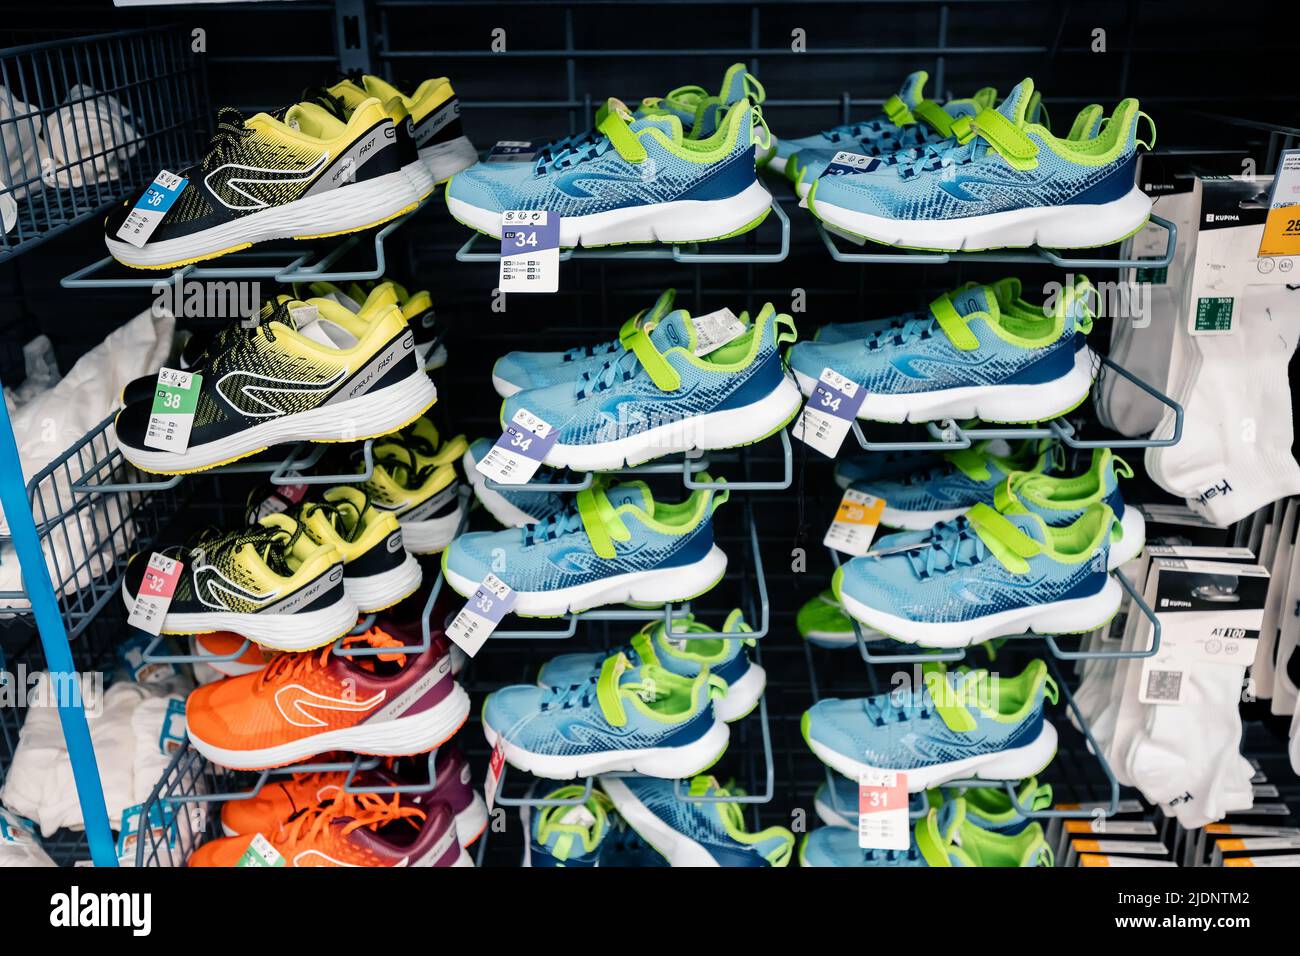 26 May 2022, Antalya, Turkey: Kiprun running shoes at the showcase for sale  in Decathlon shop Stock Photo - Alamy